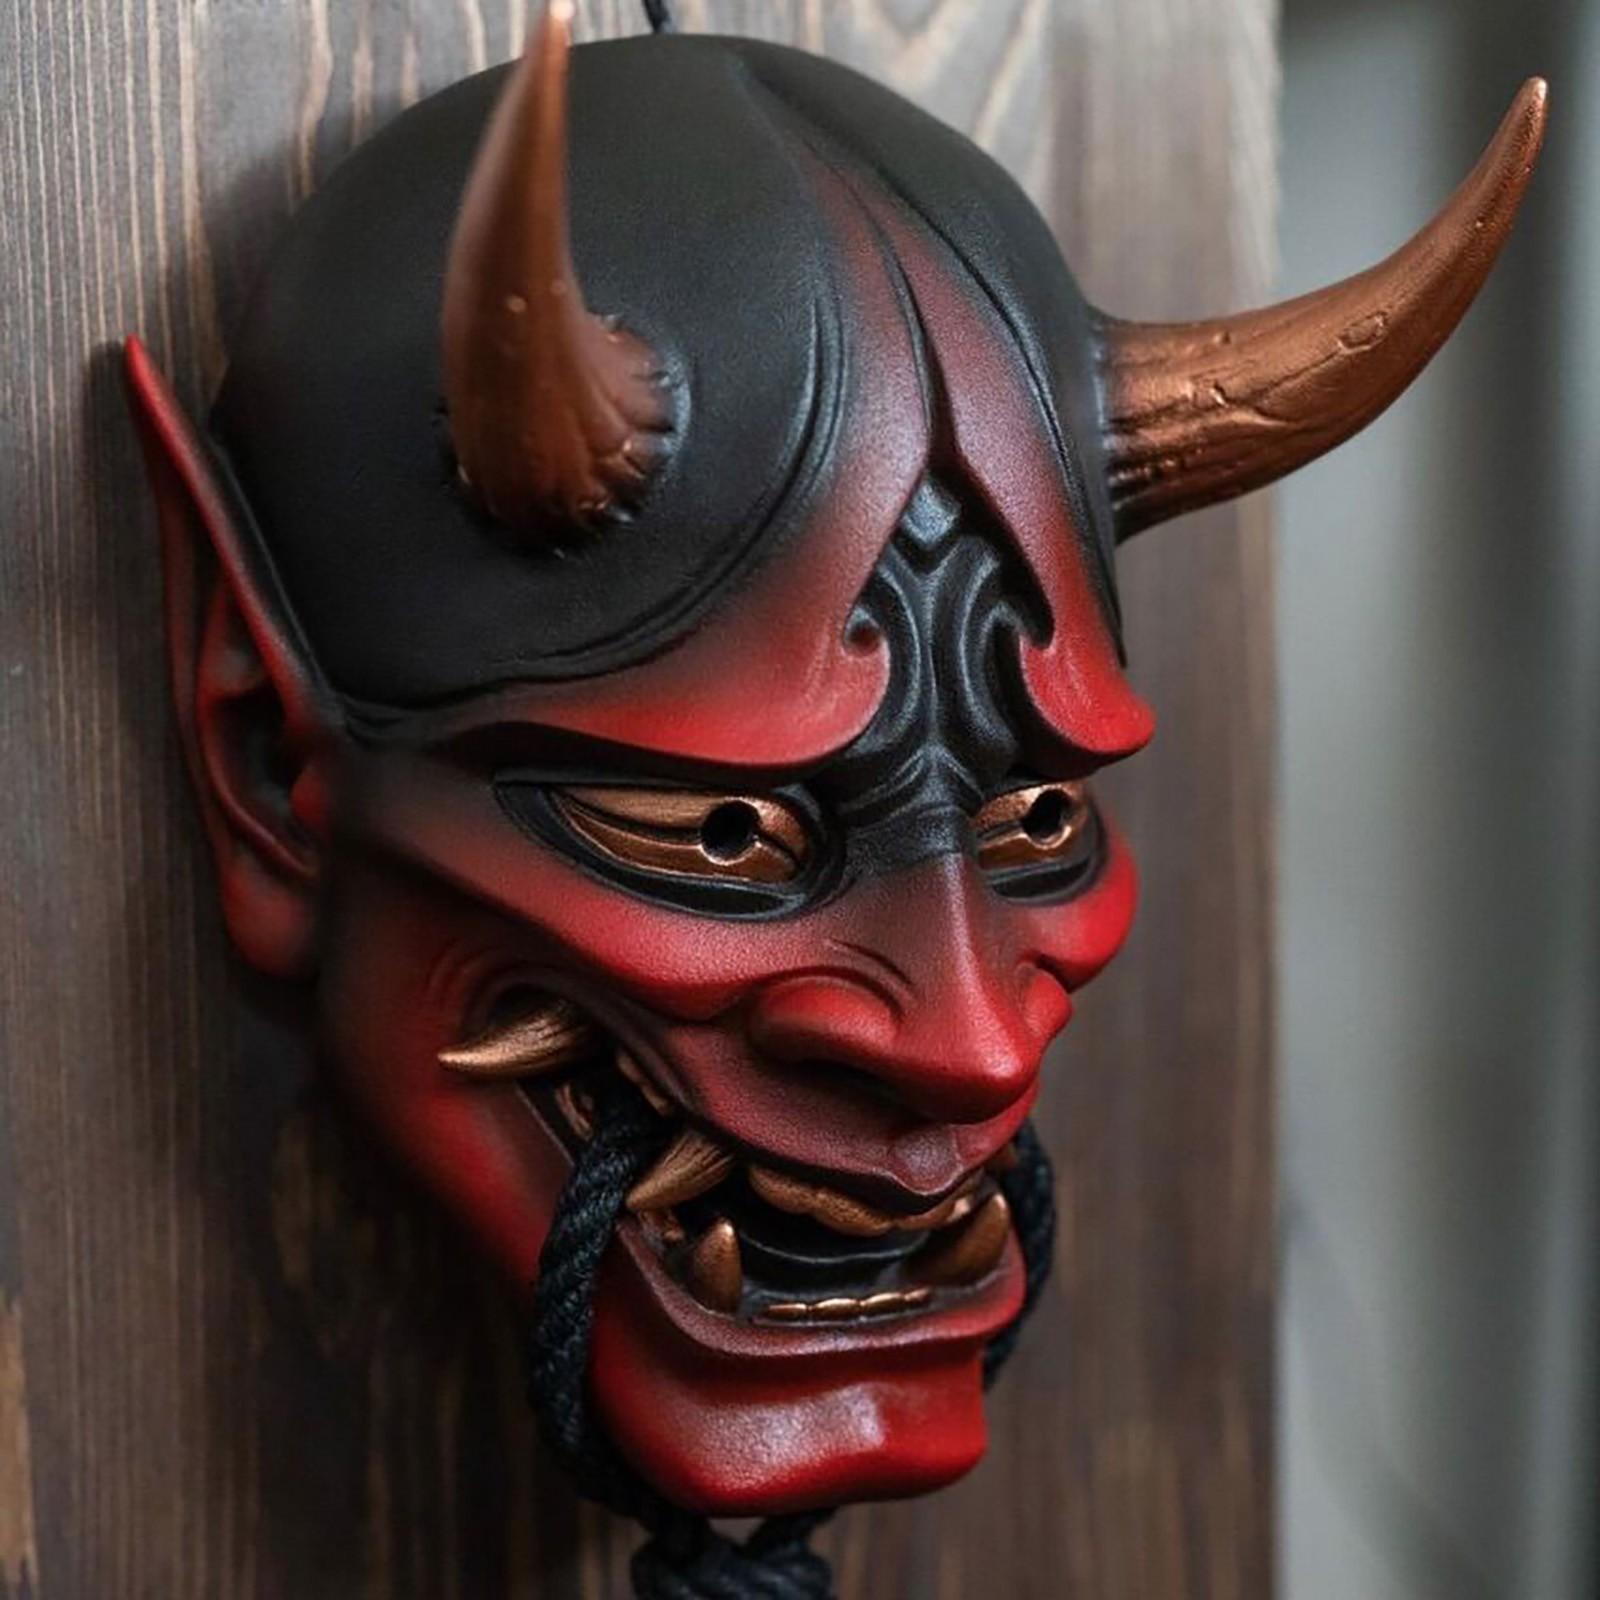 Јапанска демонска маска на карневалском лицу